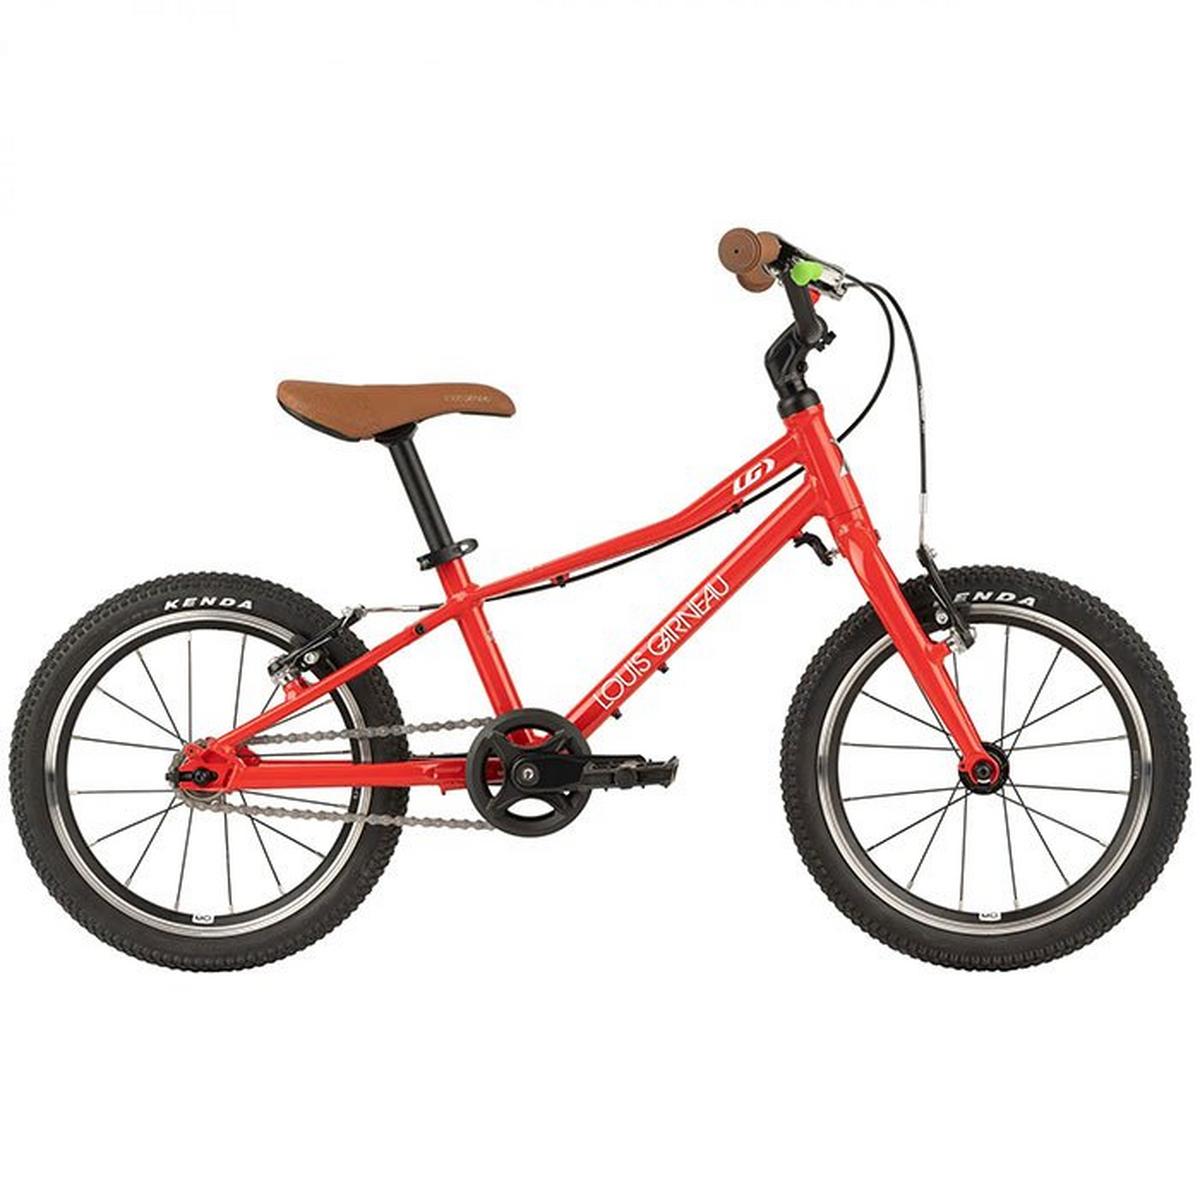 Kids' LG03 16" Bike